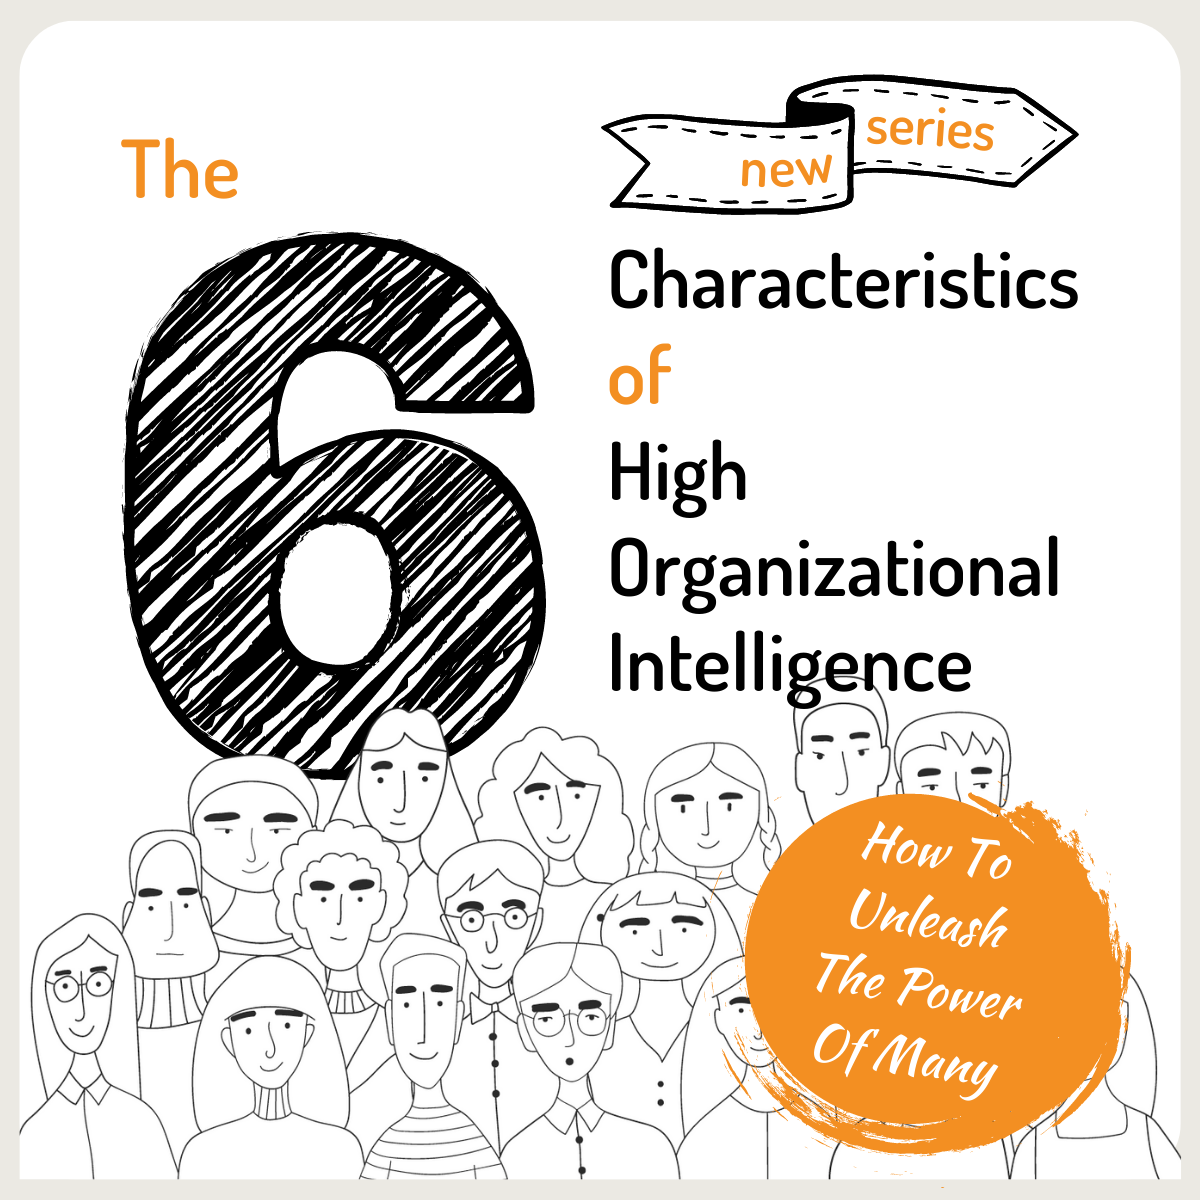 New Series starting on Characterstics of High Organizational Intelligence